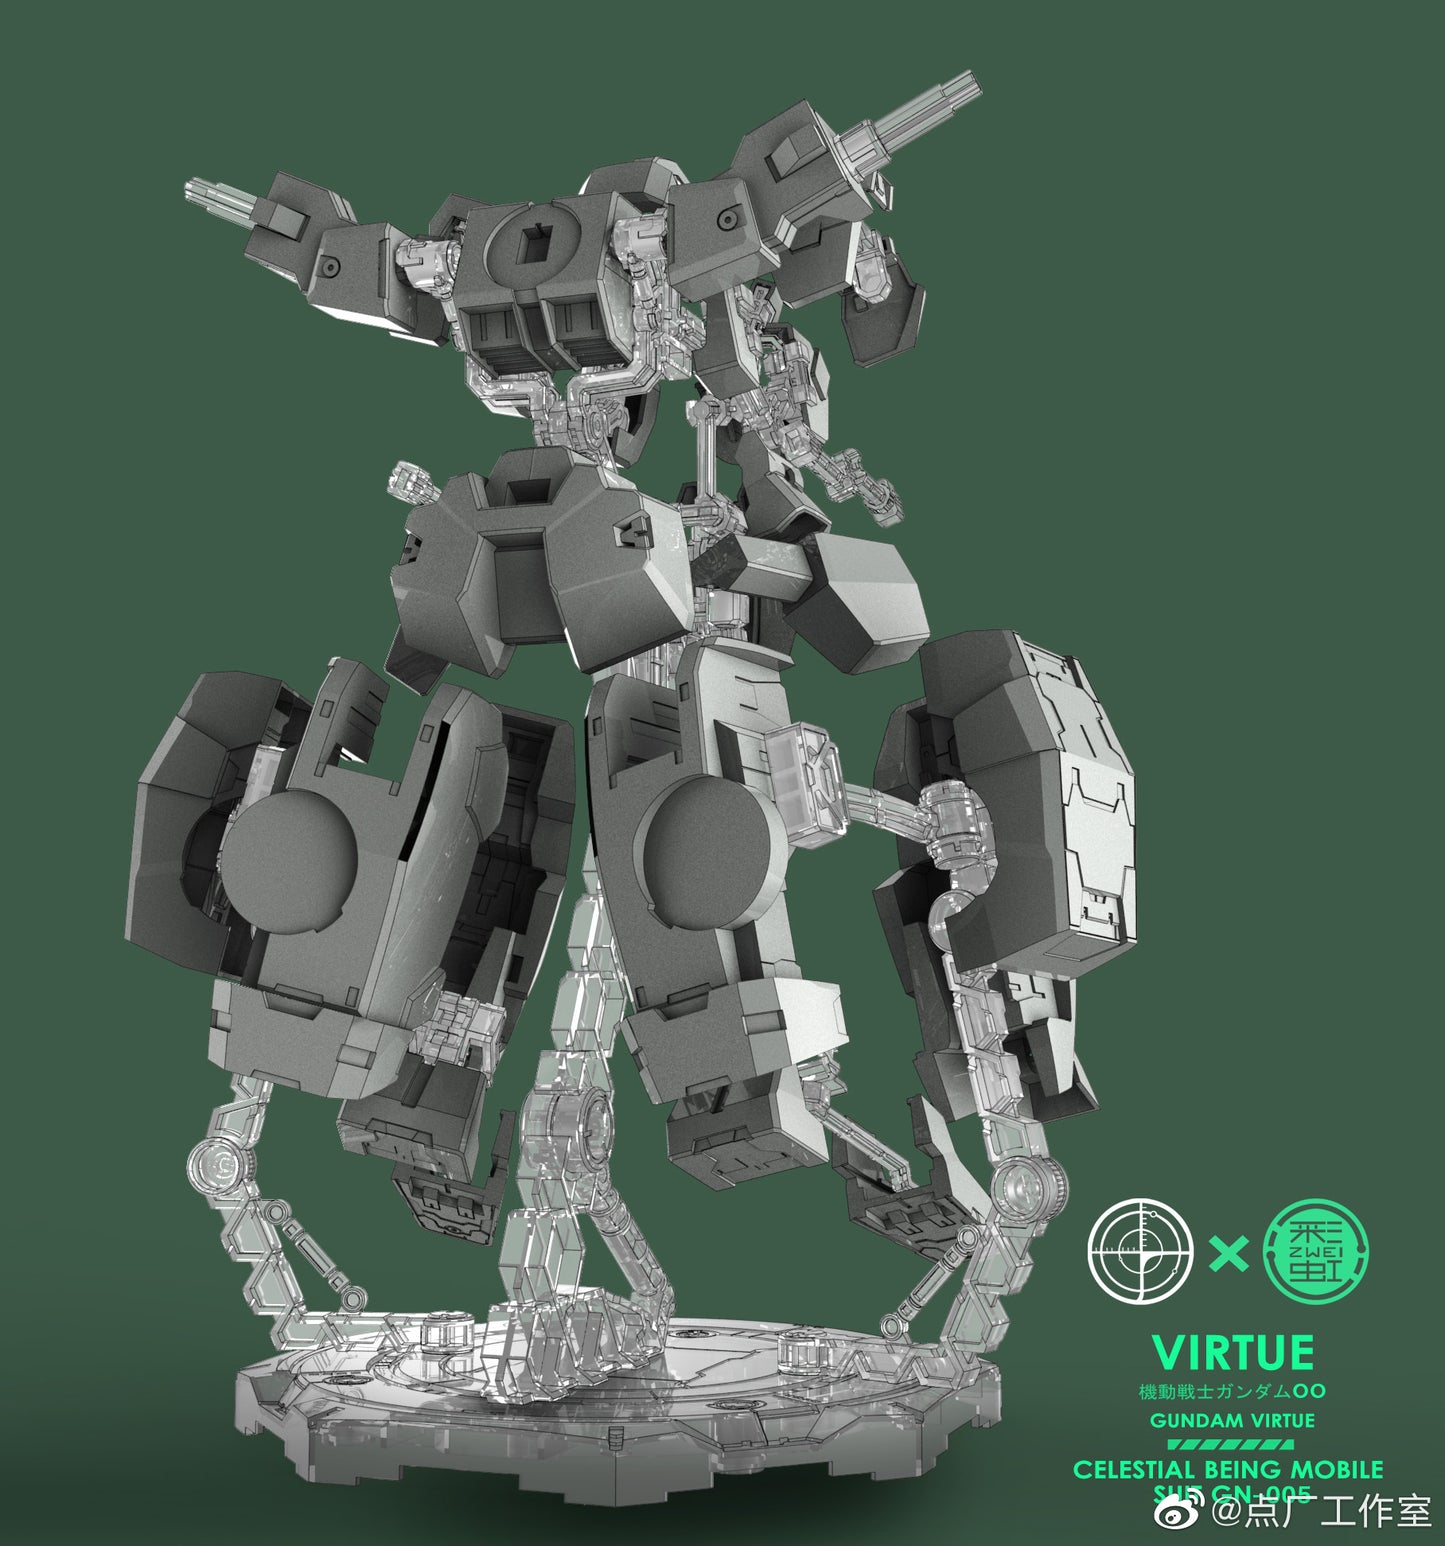 DOT Workshop - MG 1/100 Virtue Armor Display Stand